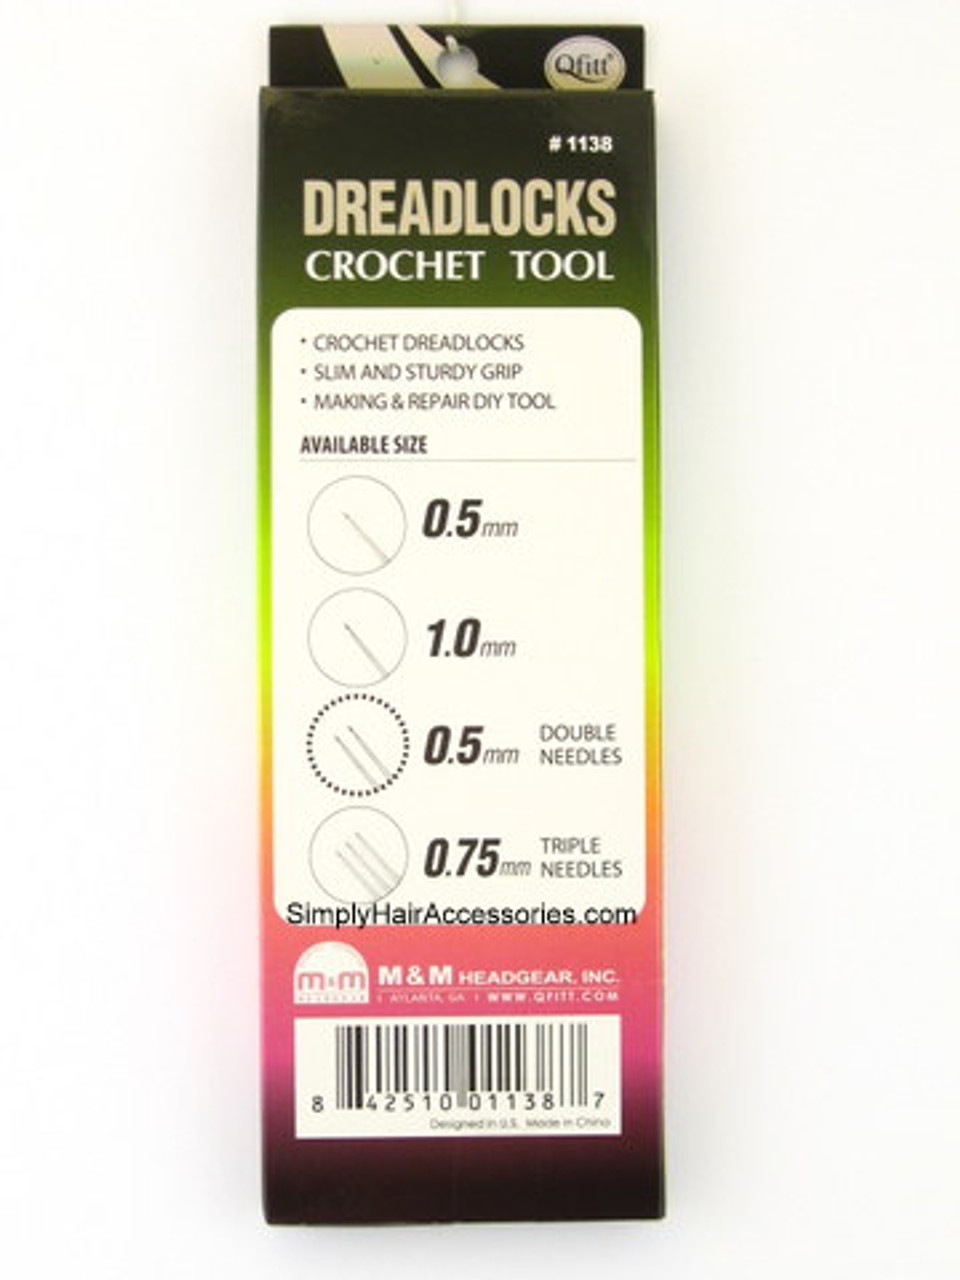 Buy Dreadlock Needle 3 Set 0.5mm - Dread Extensions